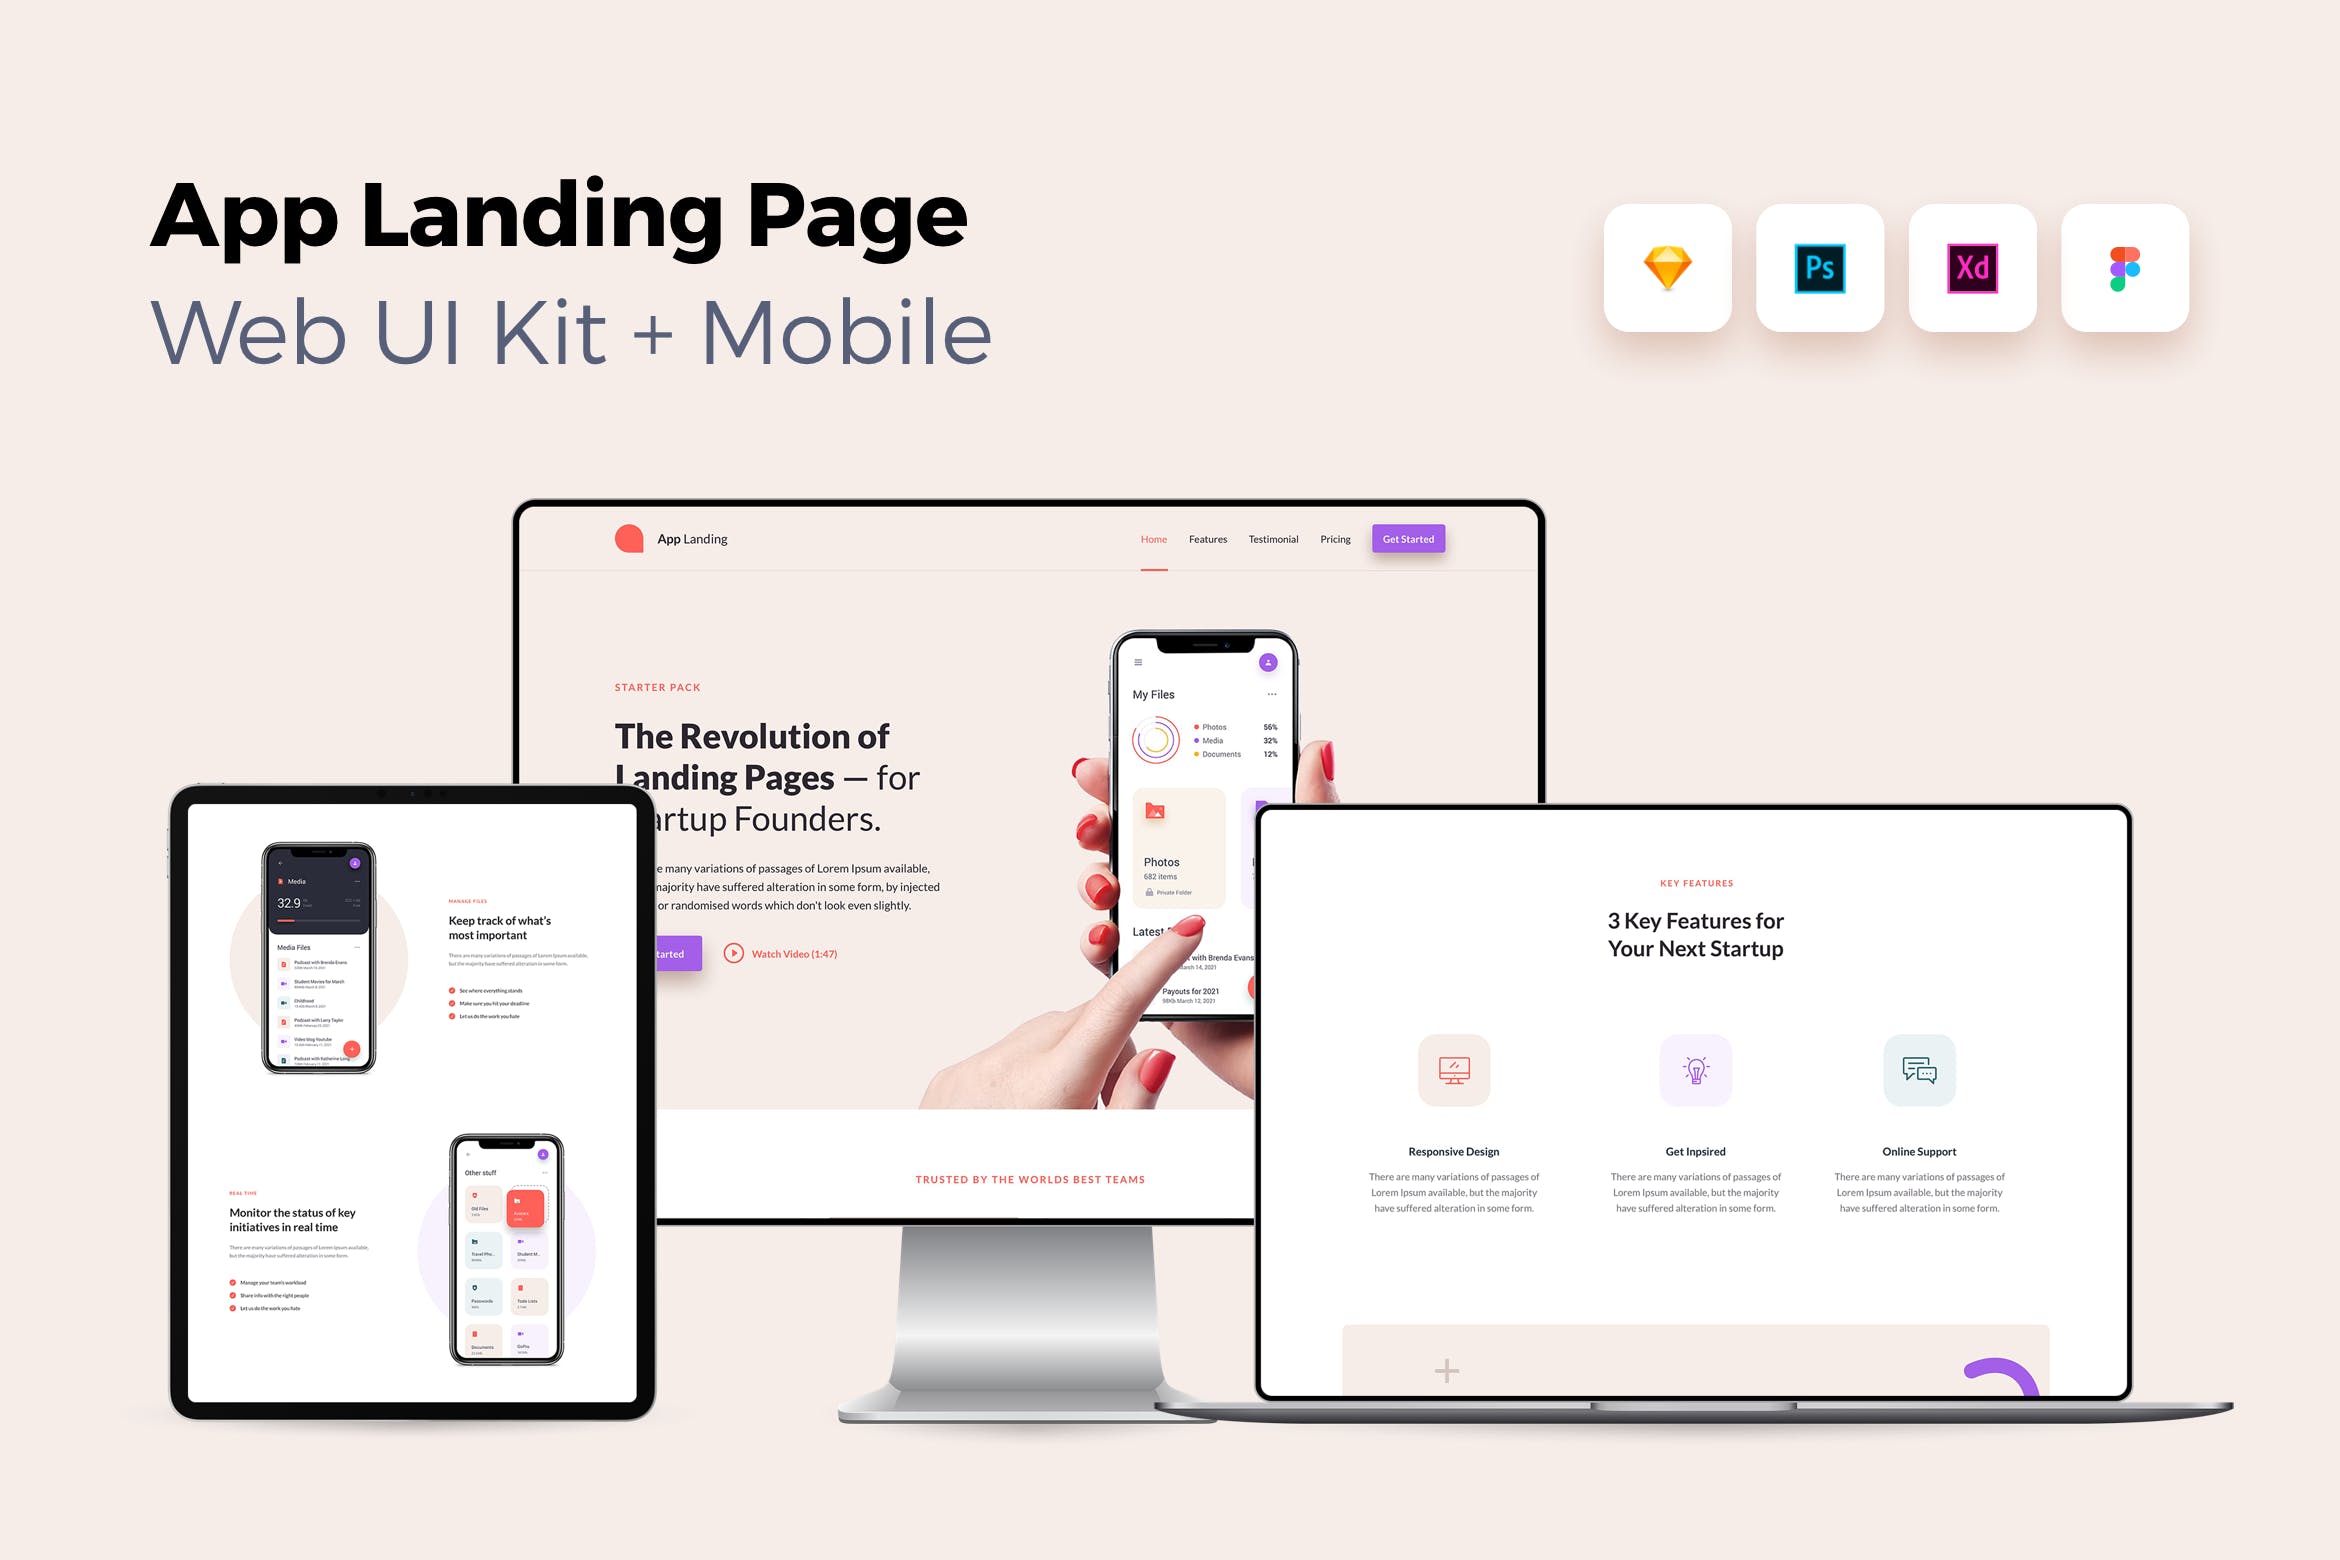 iOS端APP应用产品网站着陆页设计大洋岛精选套件v1 iOS App Landing Page – Web UI Kit + Mobile – 1插图